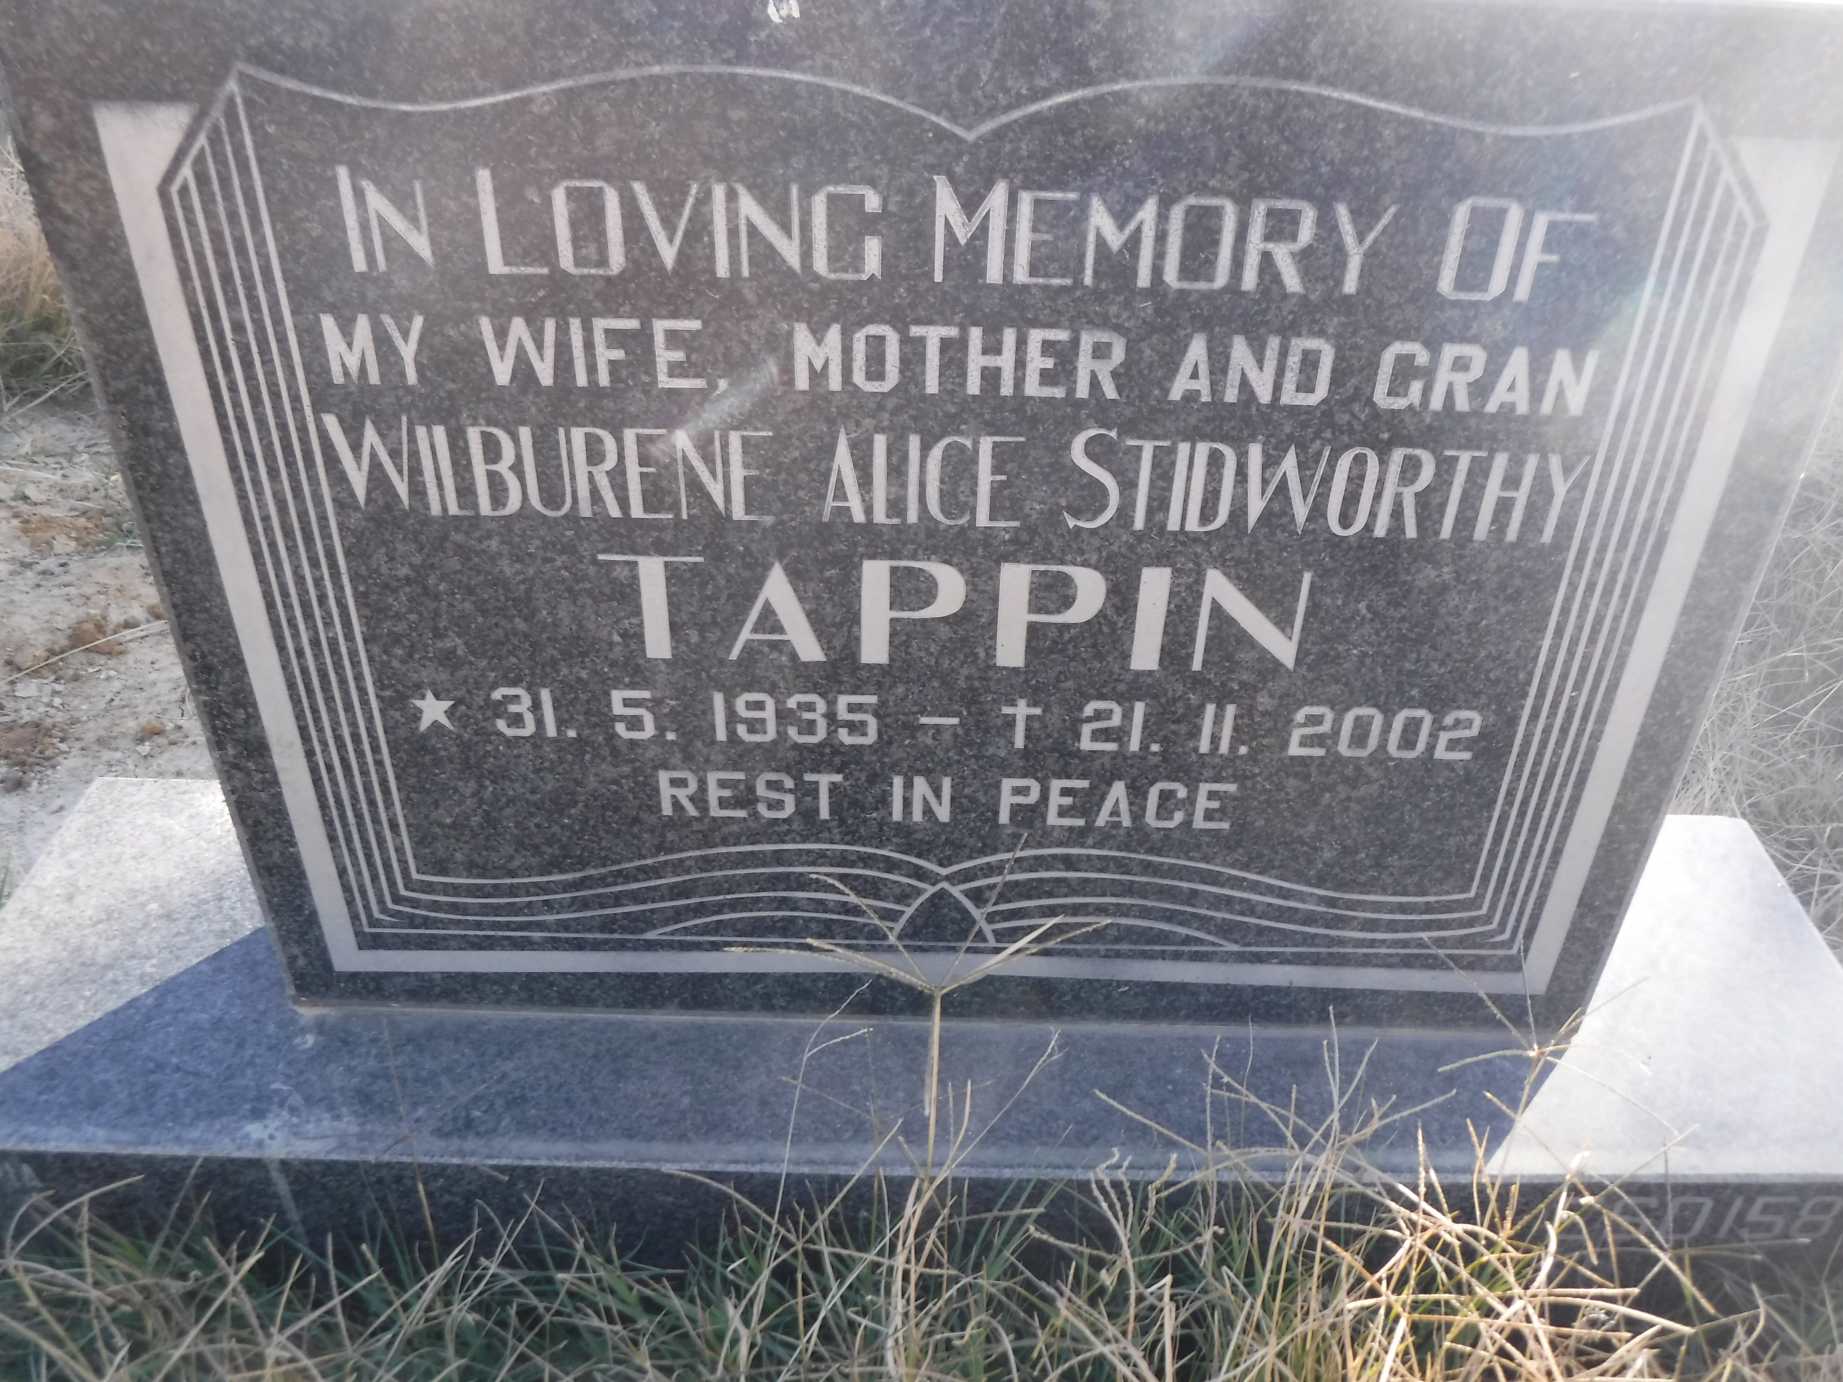 TAPPIN Wilburene Alice Stidworthy 1935-2002